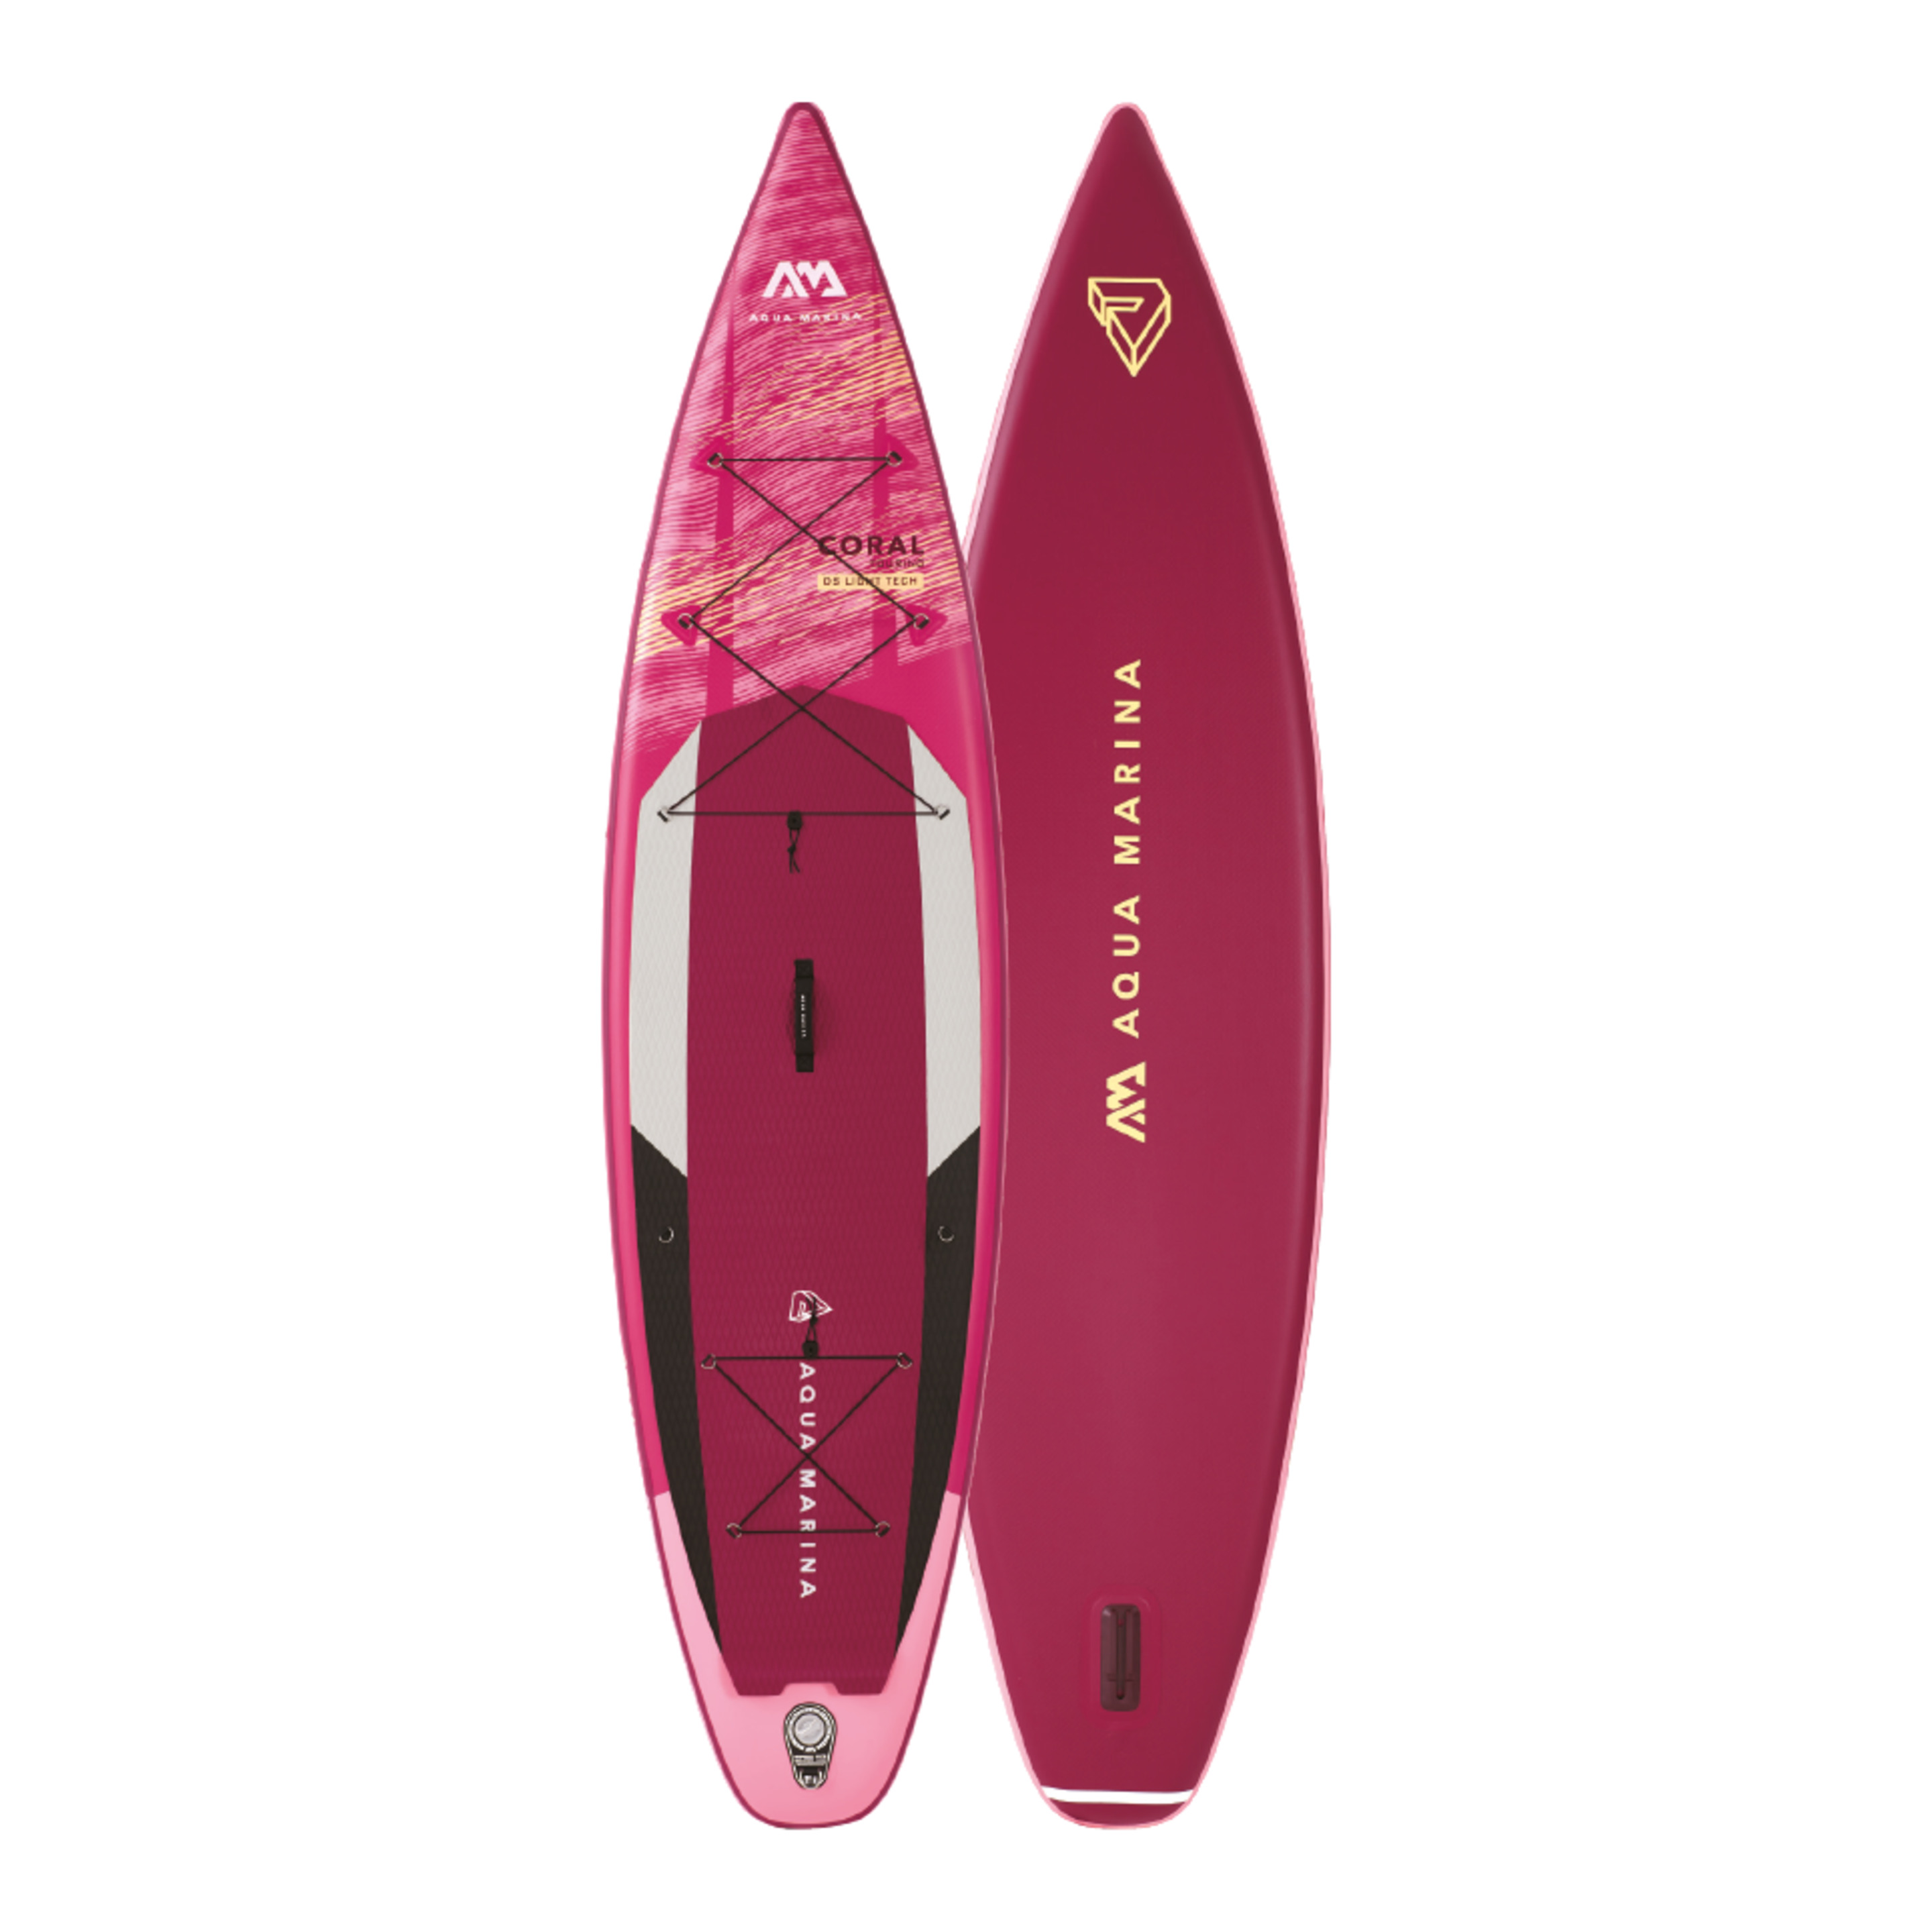 Tabla Paddle Surf Aqua Marina Touring 11? 6? - Coral/Burdeos - Touring Series  MKP